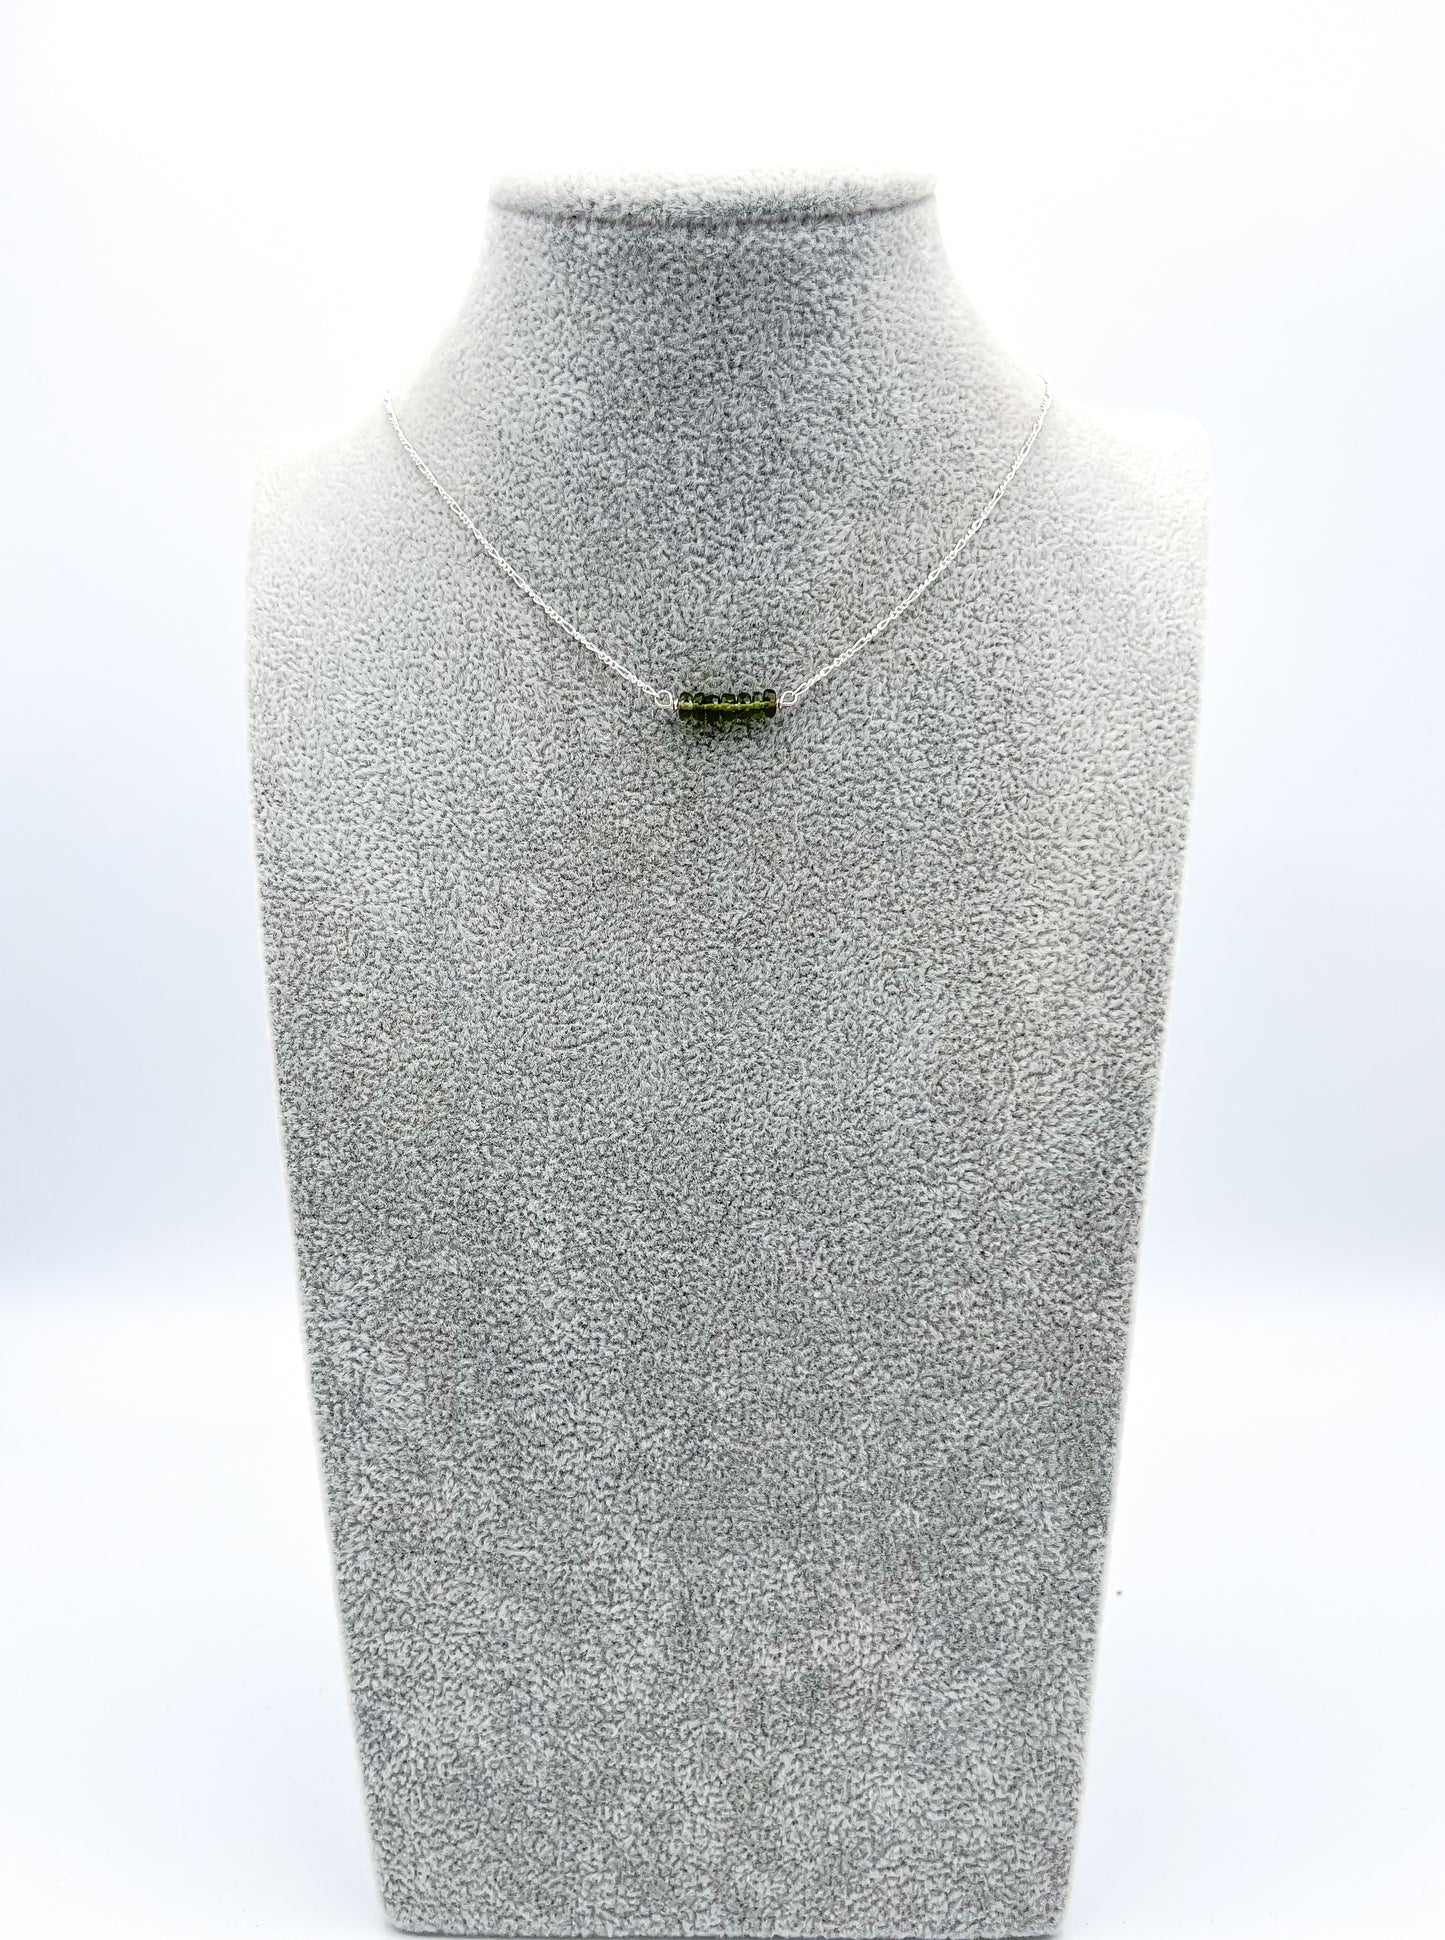 Minimalist Genuine Moldavite sterling silver Choker Necklace, wire wrapped jewelry, handmade gift